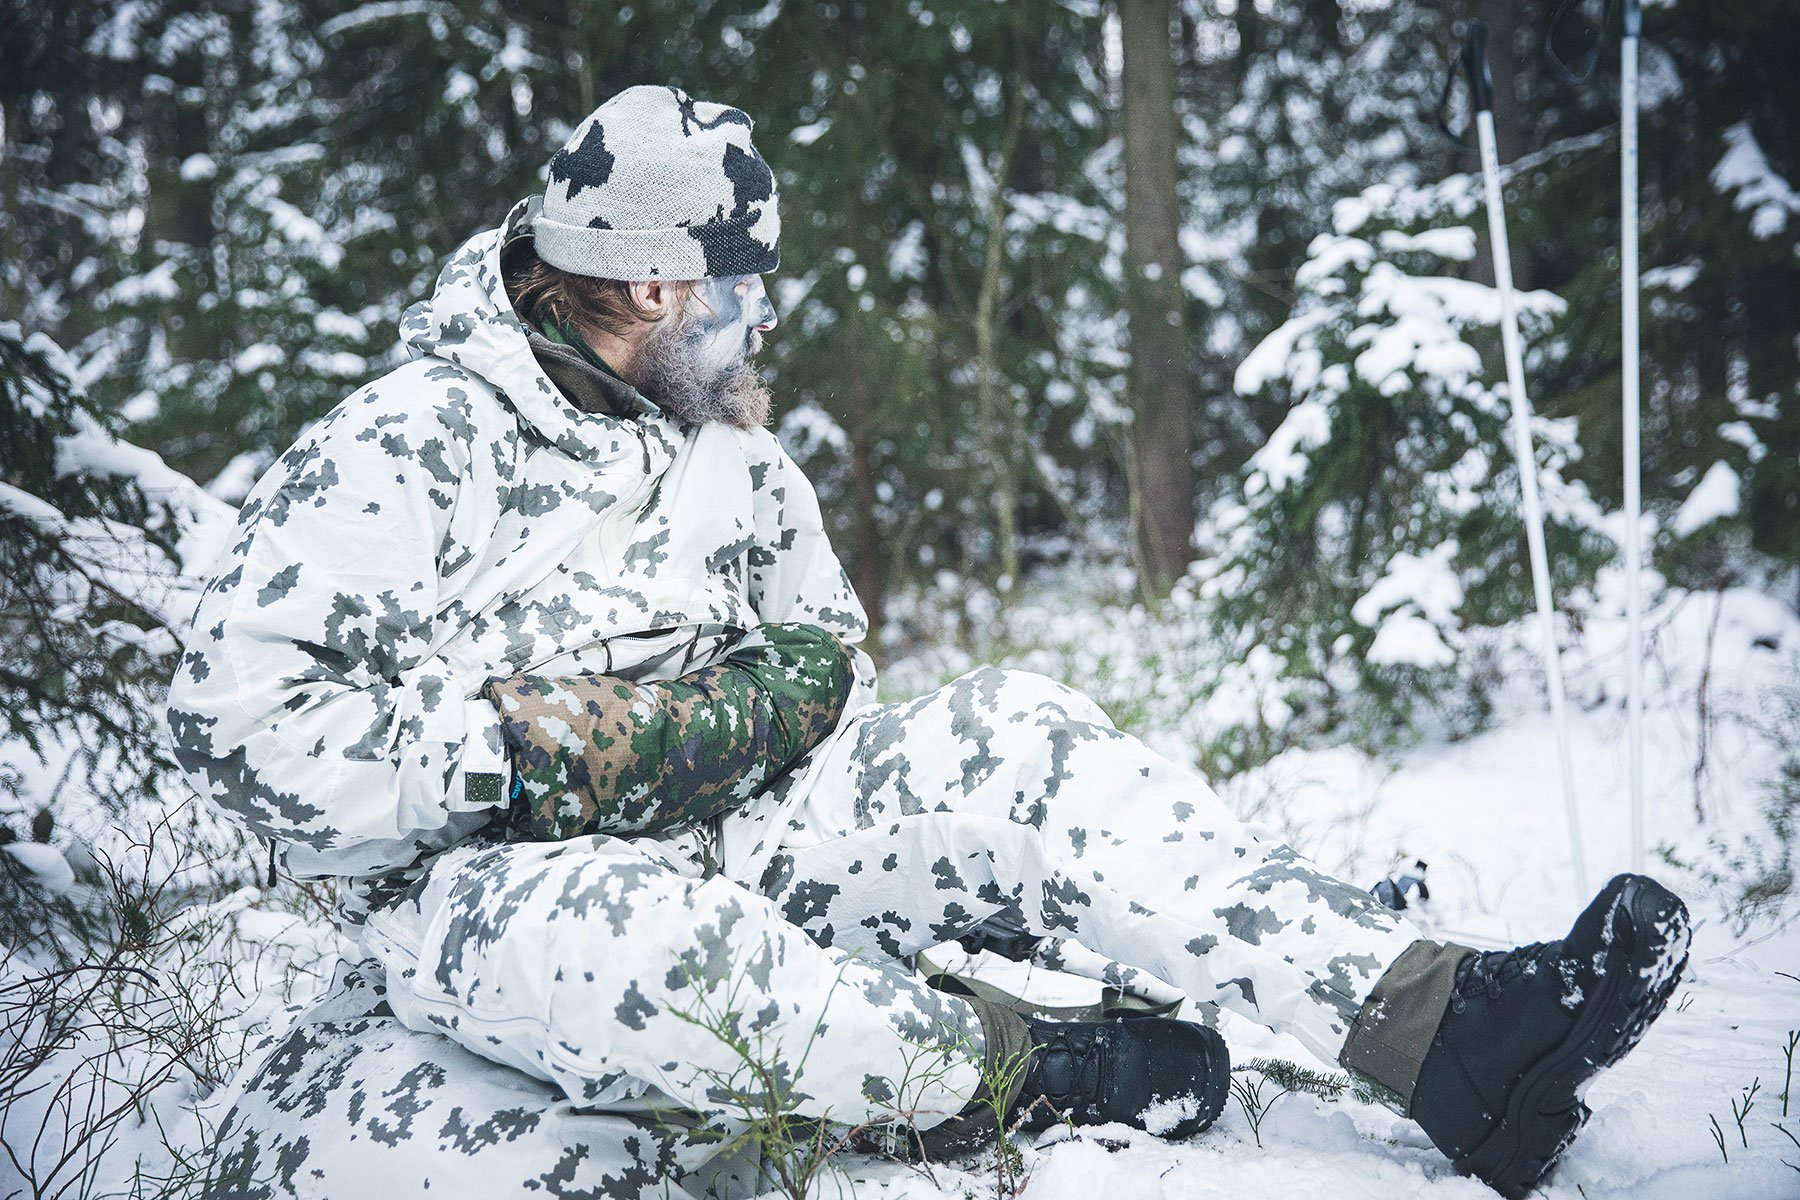 L7 snow camo soldier taking a break